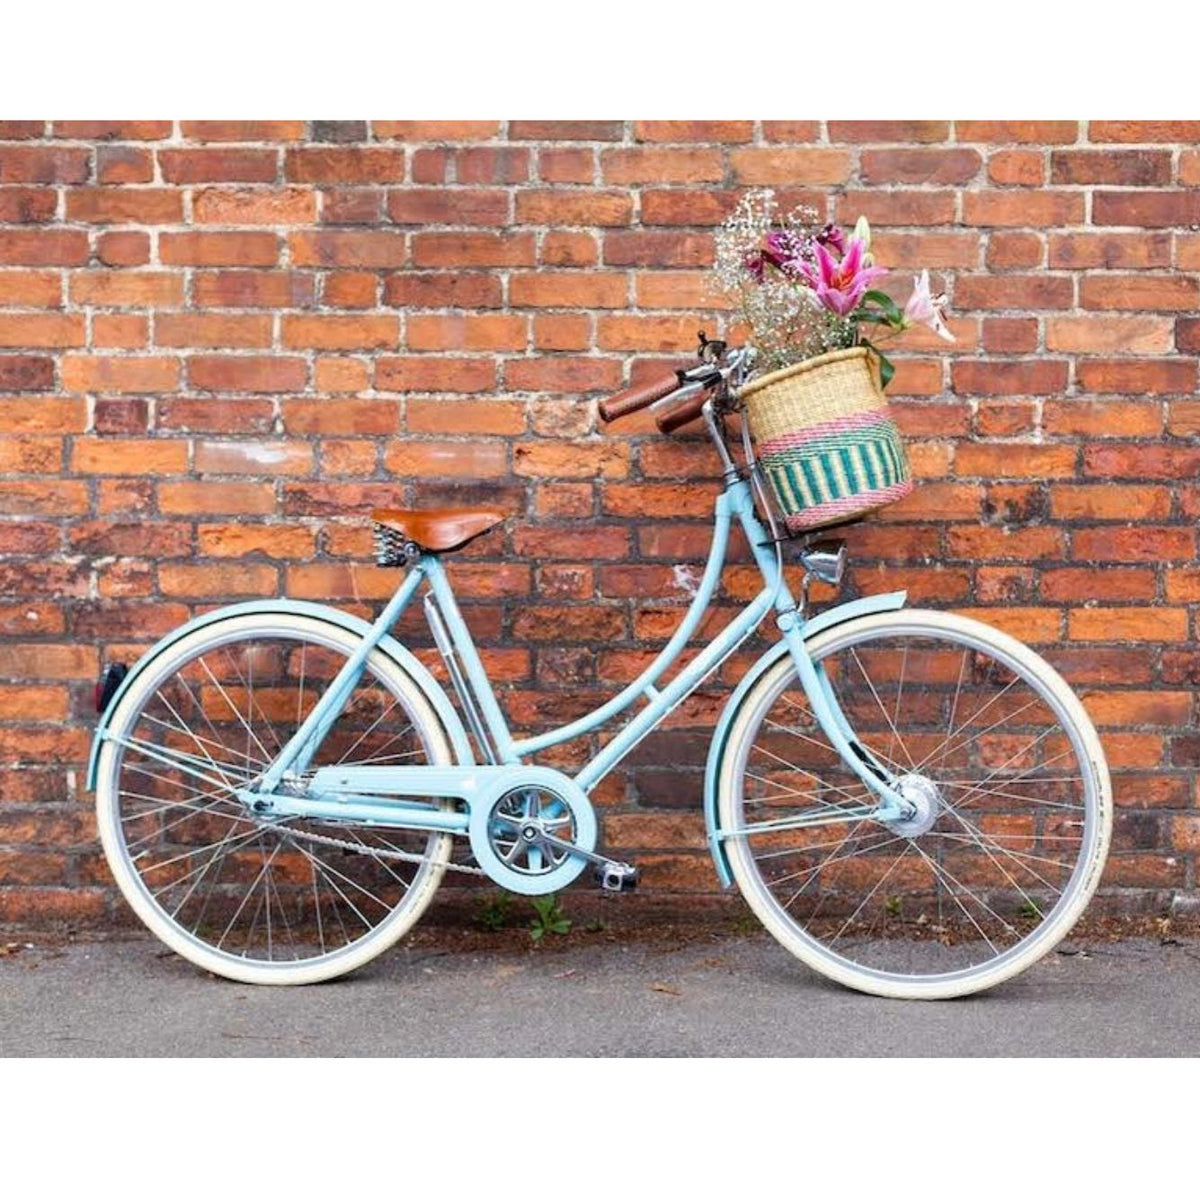 Apana Handcrafted Pink/Turquoise Bike Basket